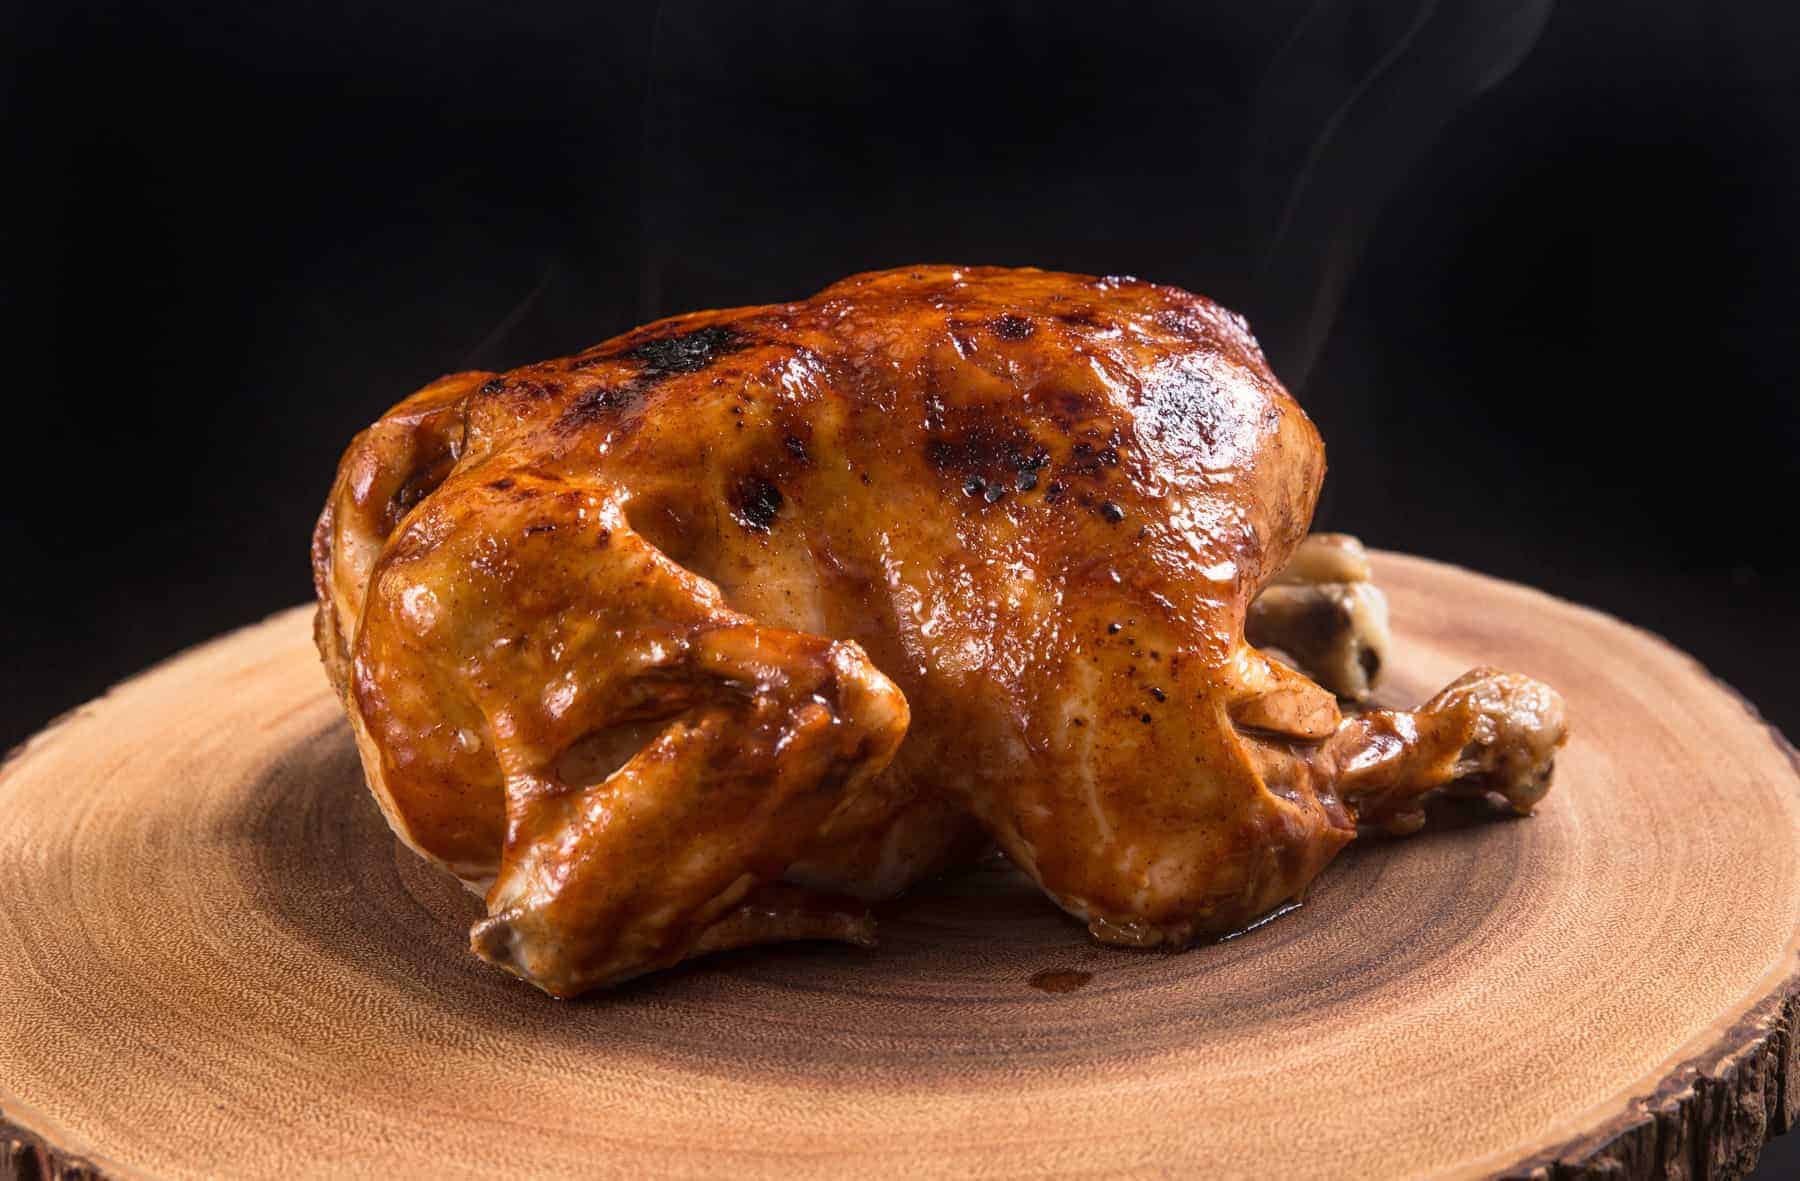 https://www.pressurecookrecipes.com/wp-content/uploads/2018/01/instant-pot-bbq-whole-chicken-recipe.jpg